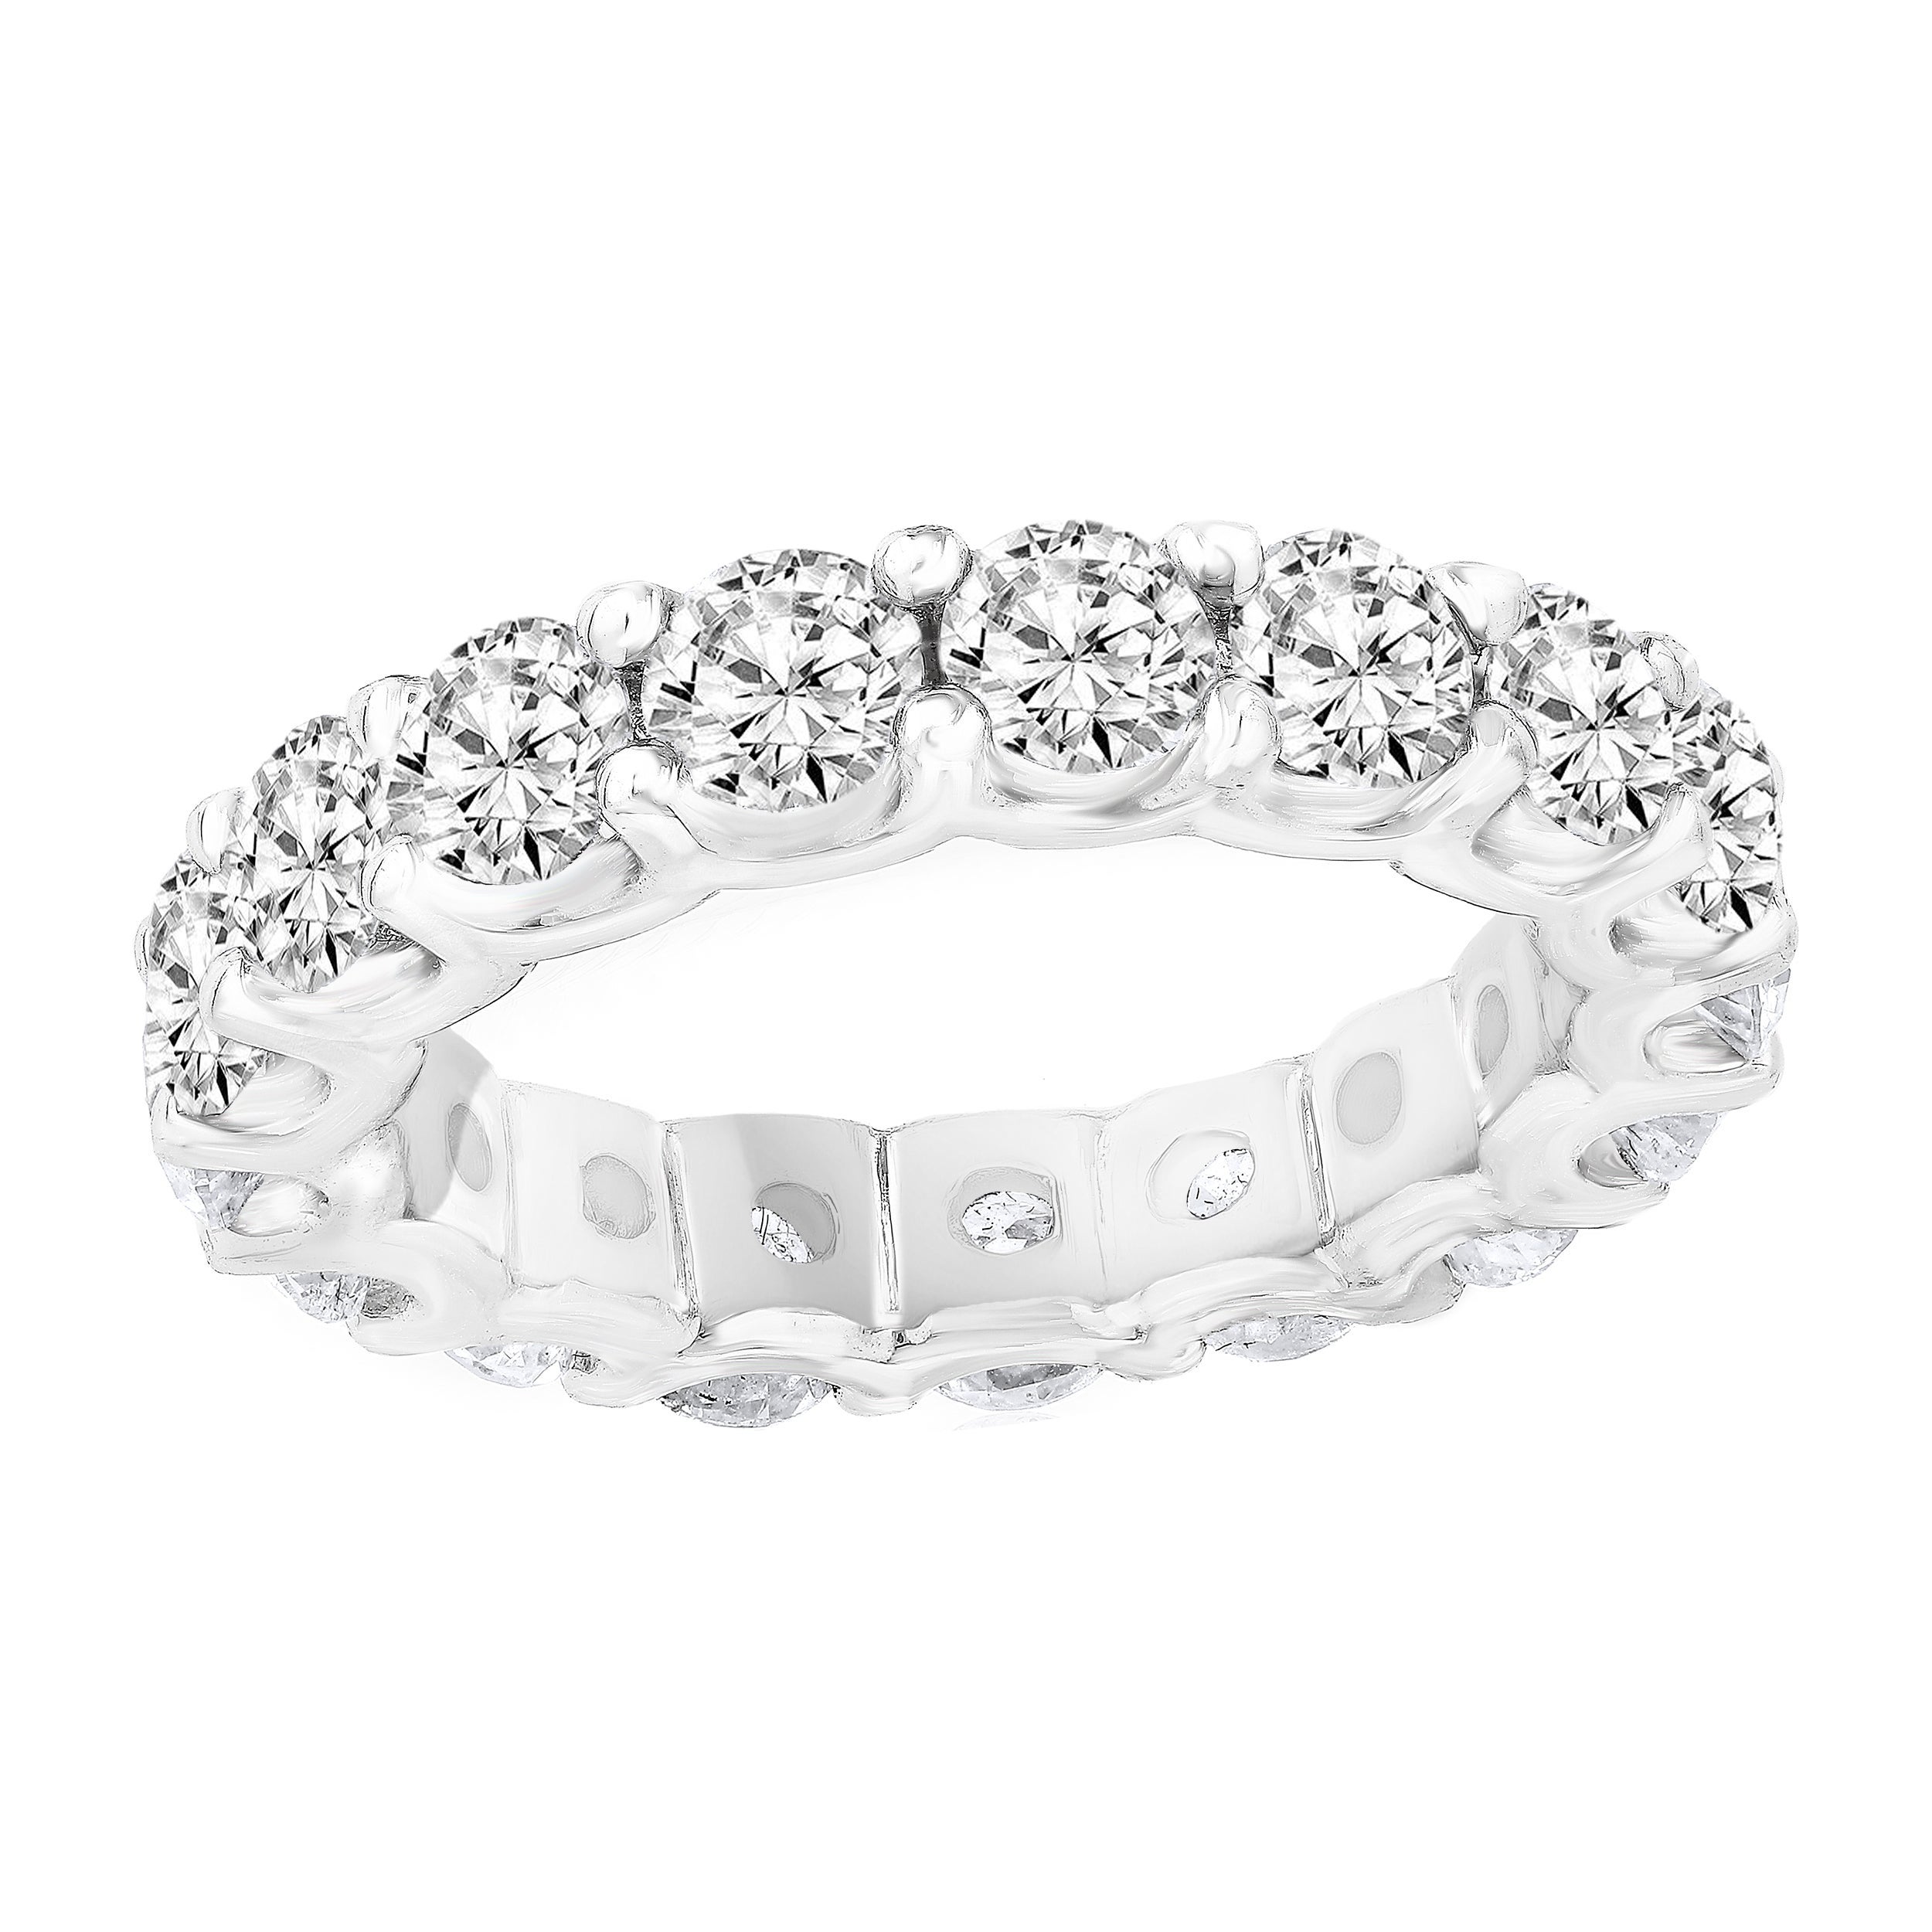 4.01 Carat Diamond Eternity Wedding Ring in 14k White Gold For Sale